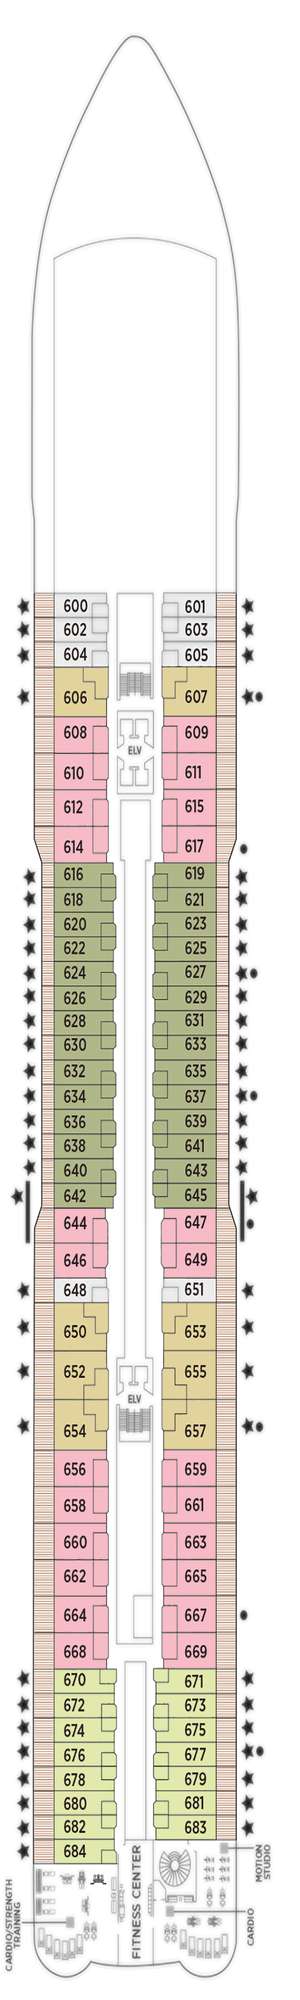 Deck plan for Regent Seven Seas Grandeur